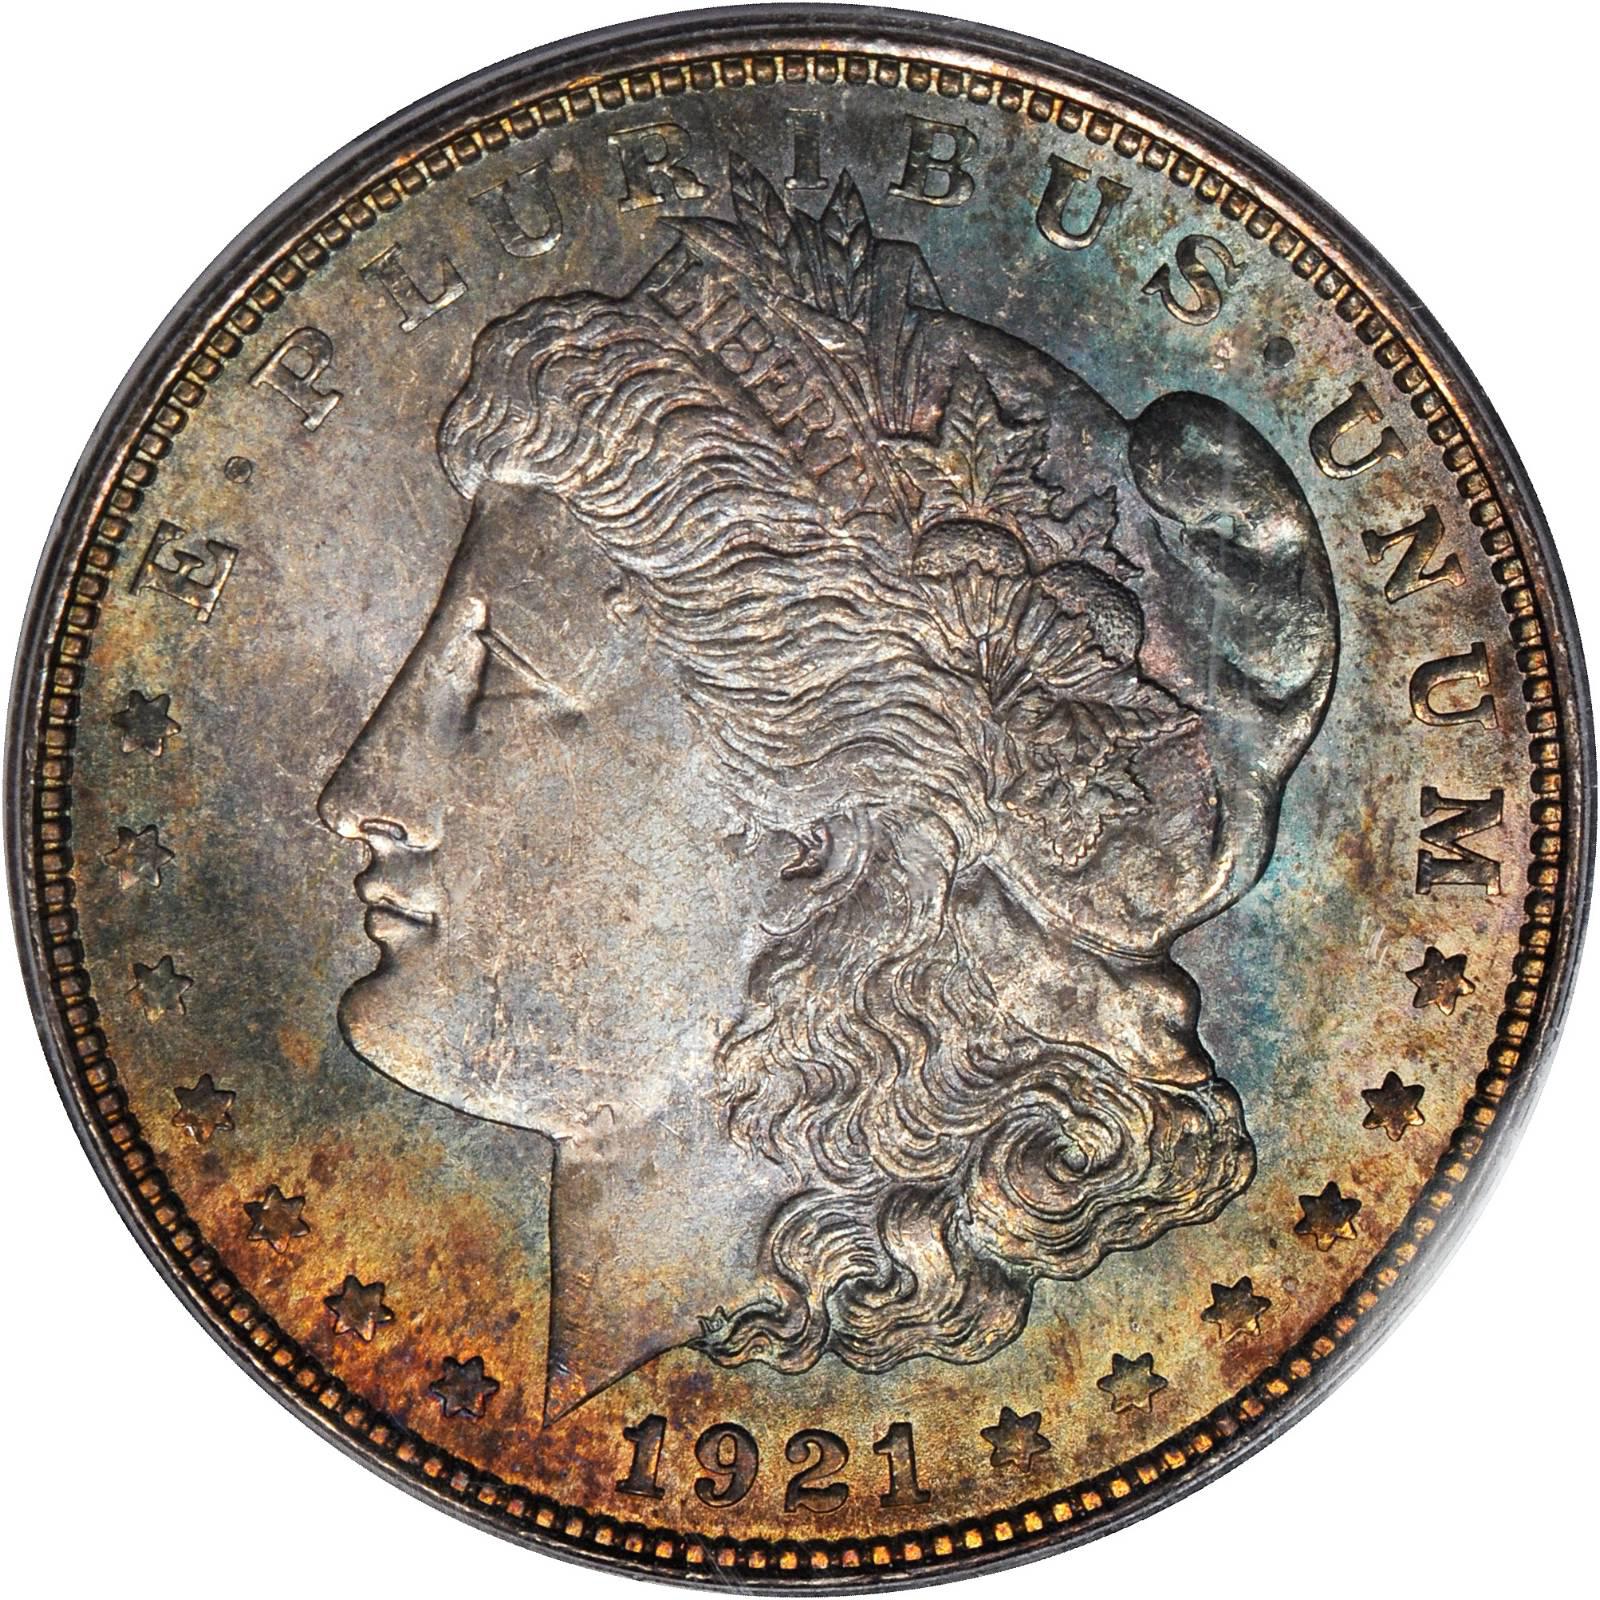 History of the Silver Morgan Dollar 